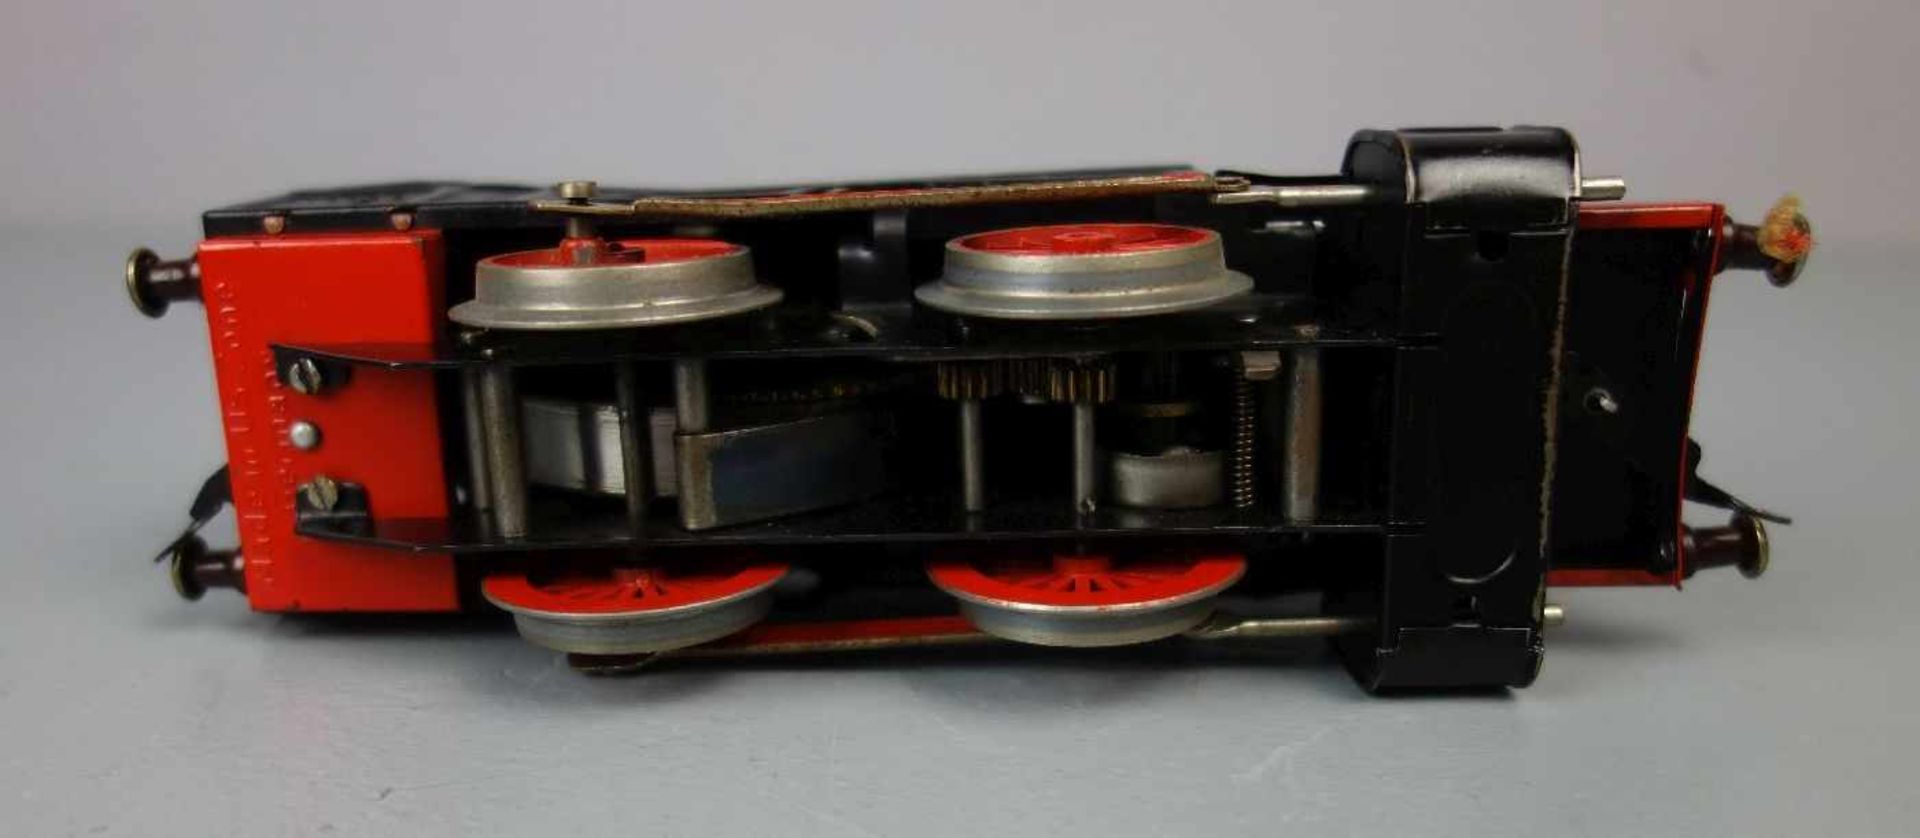 BLECHSPIELZEUG / EISENBAHN-SET: Dampflok-Set im Karton / tin toy railway, um 1950, Manufaktur - Bild 12 aus 12